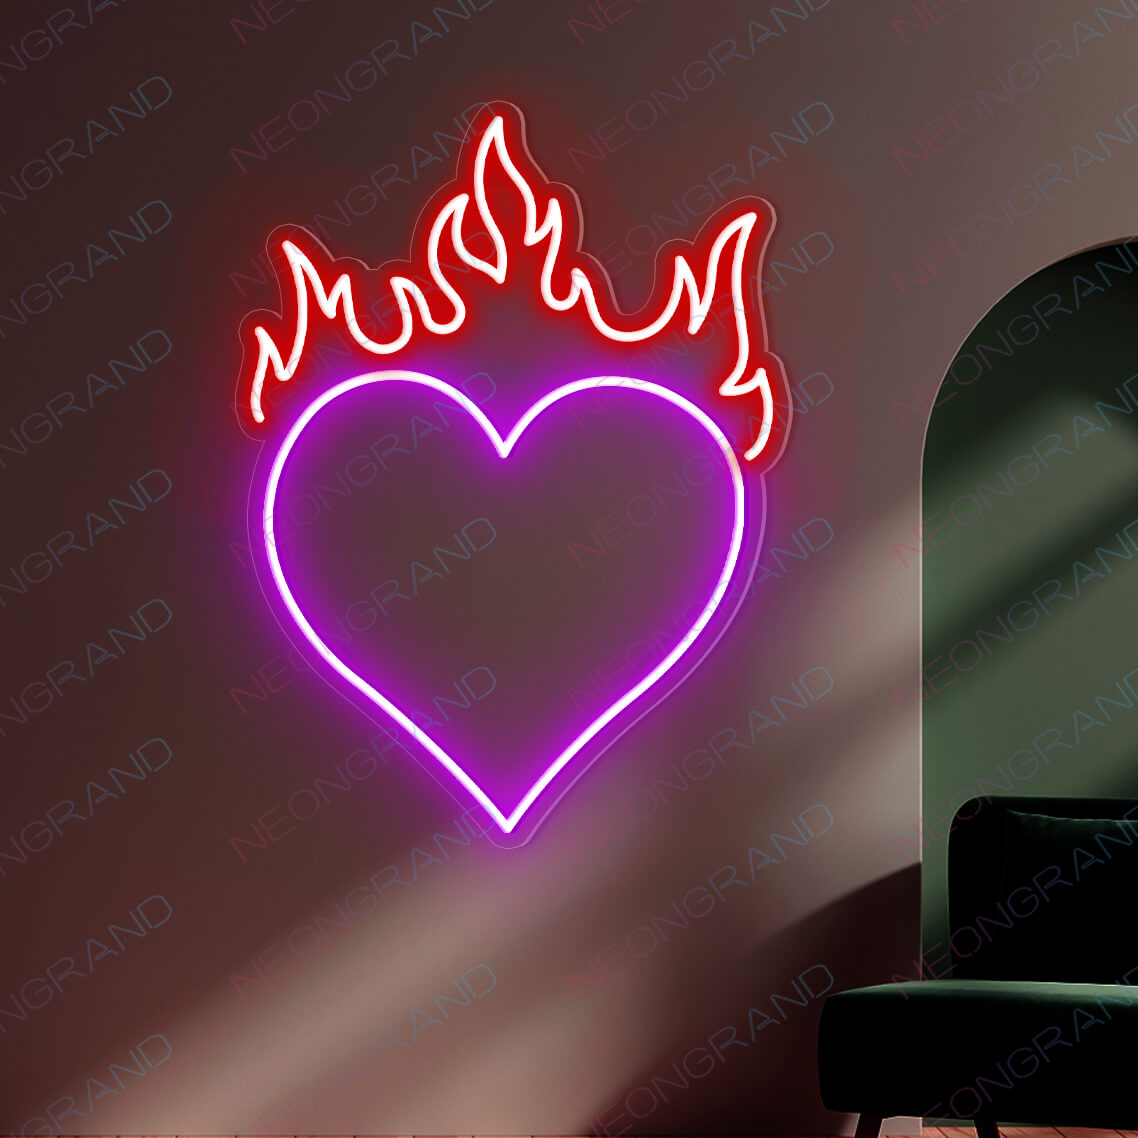 Heart Neon Sign Love Heart Fire Led Light purple